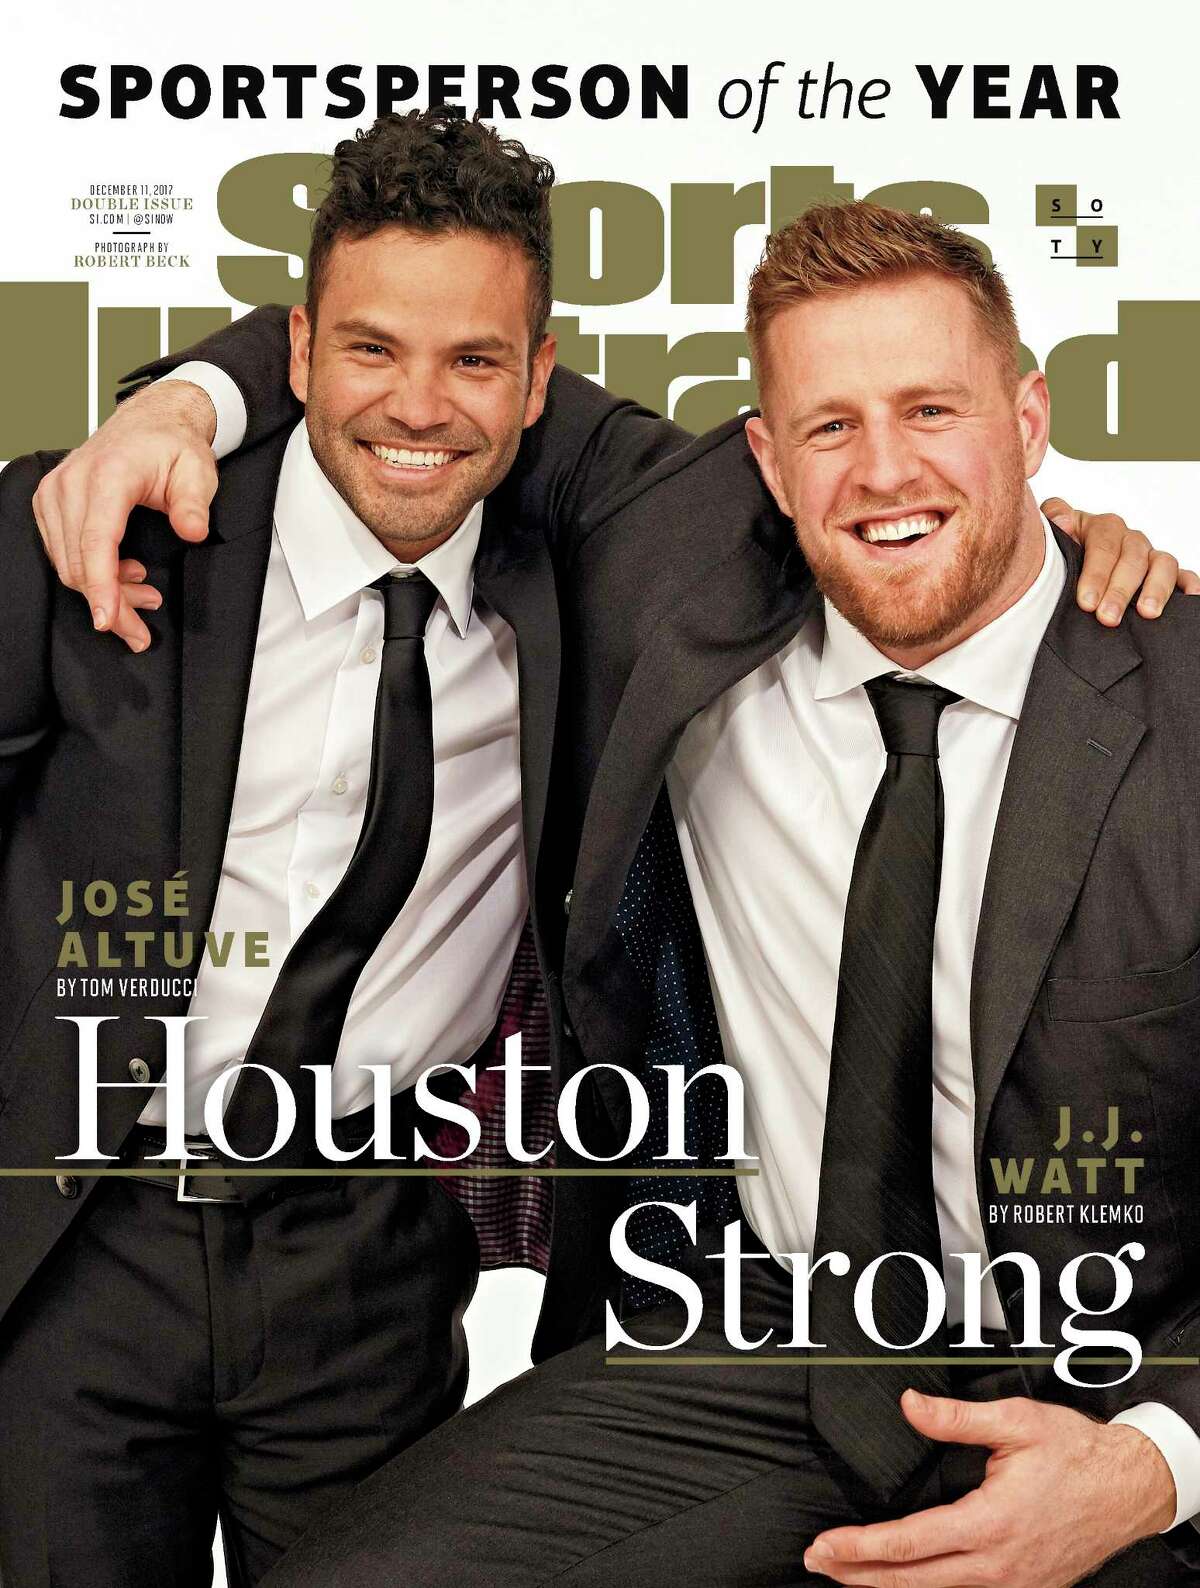 Houston Astros - Sports Illustrated